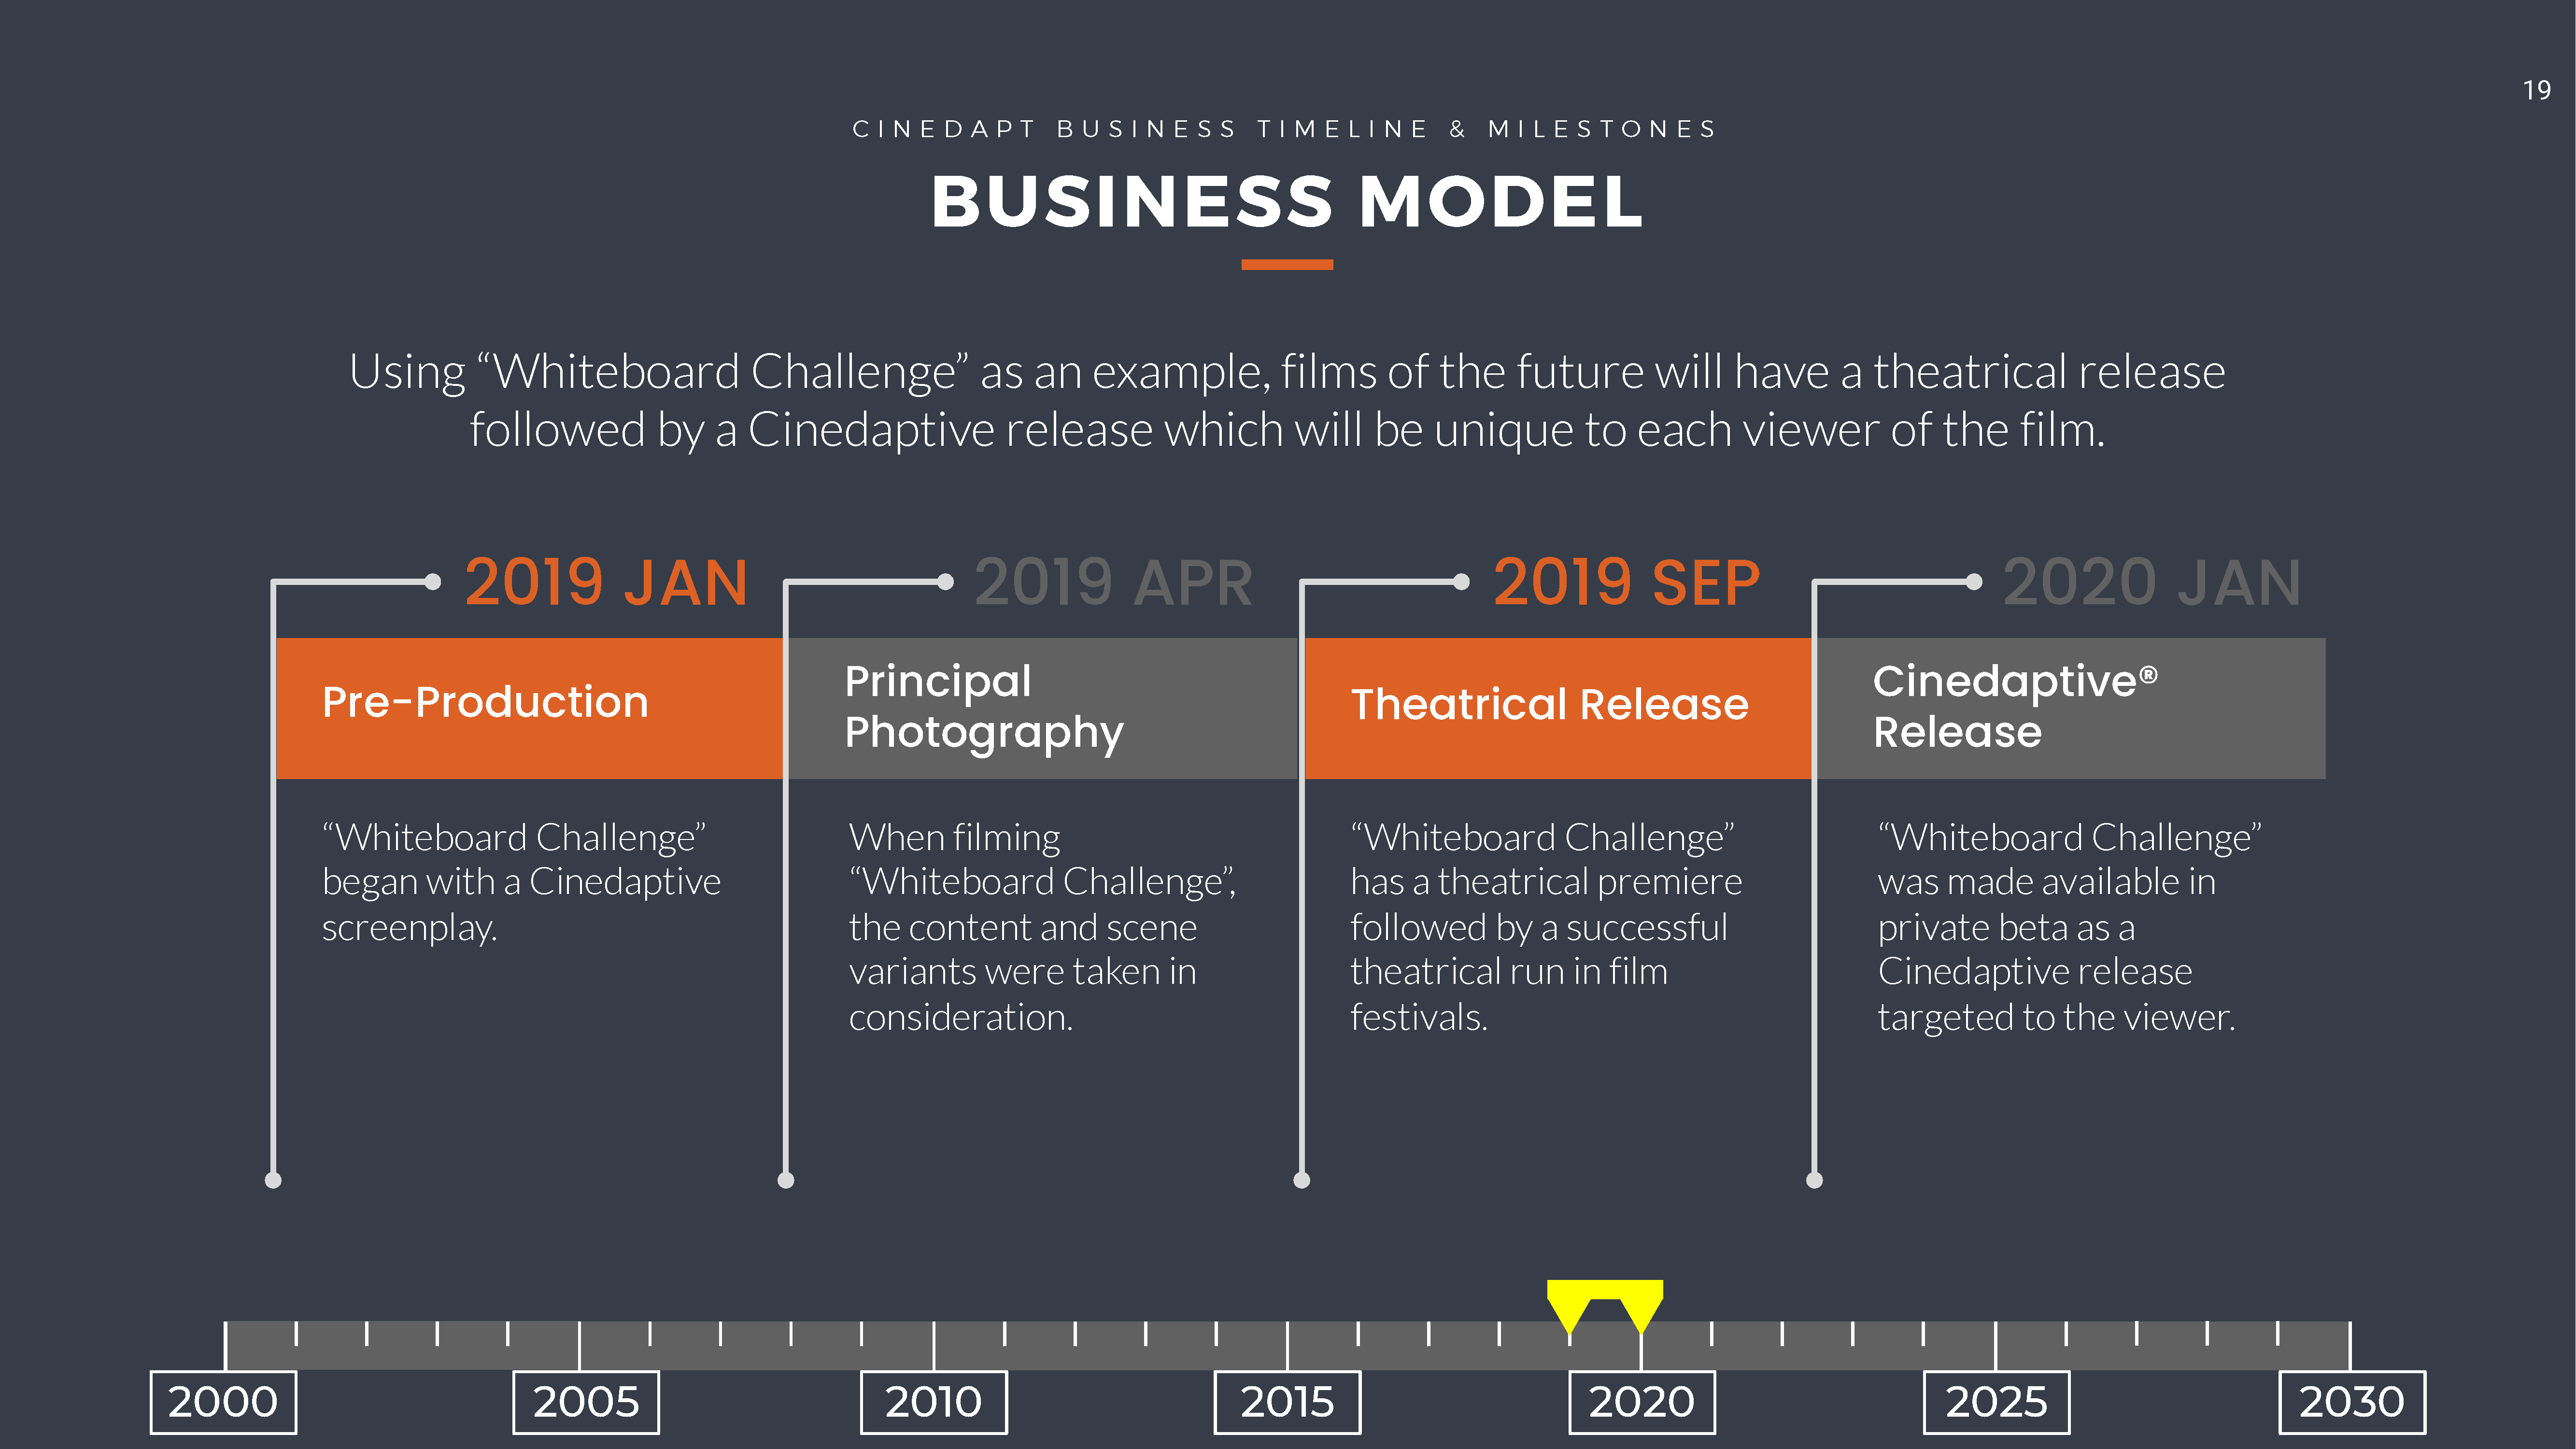 Cinedapt's proven business model